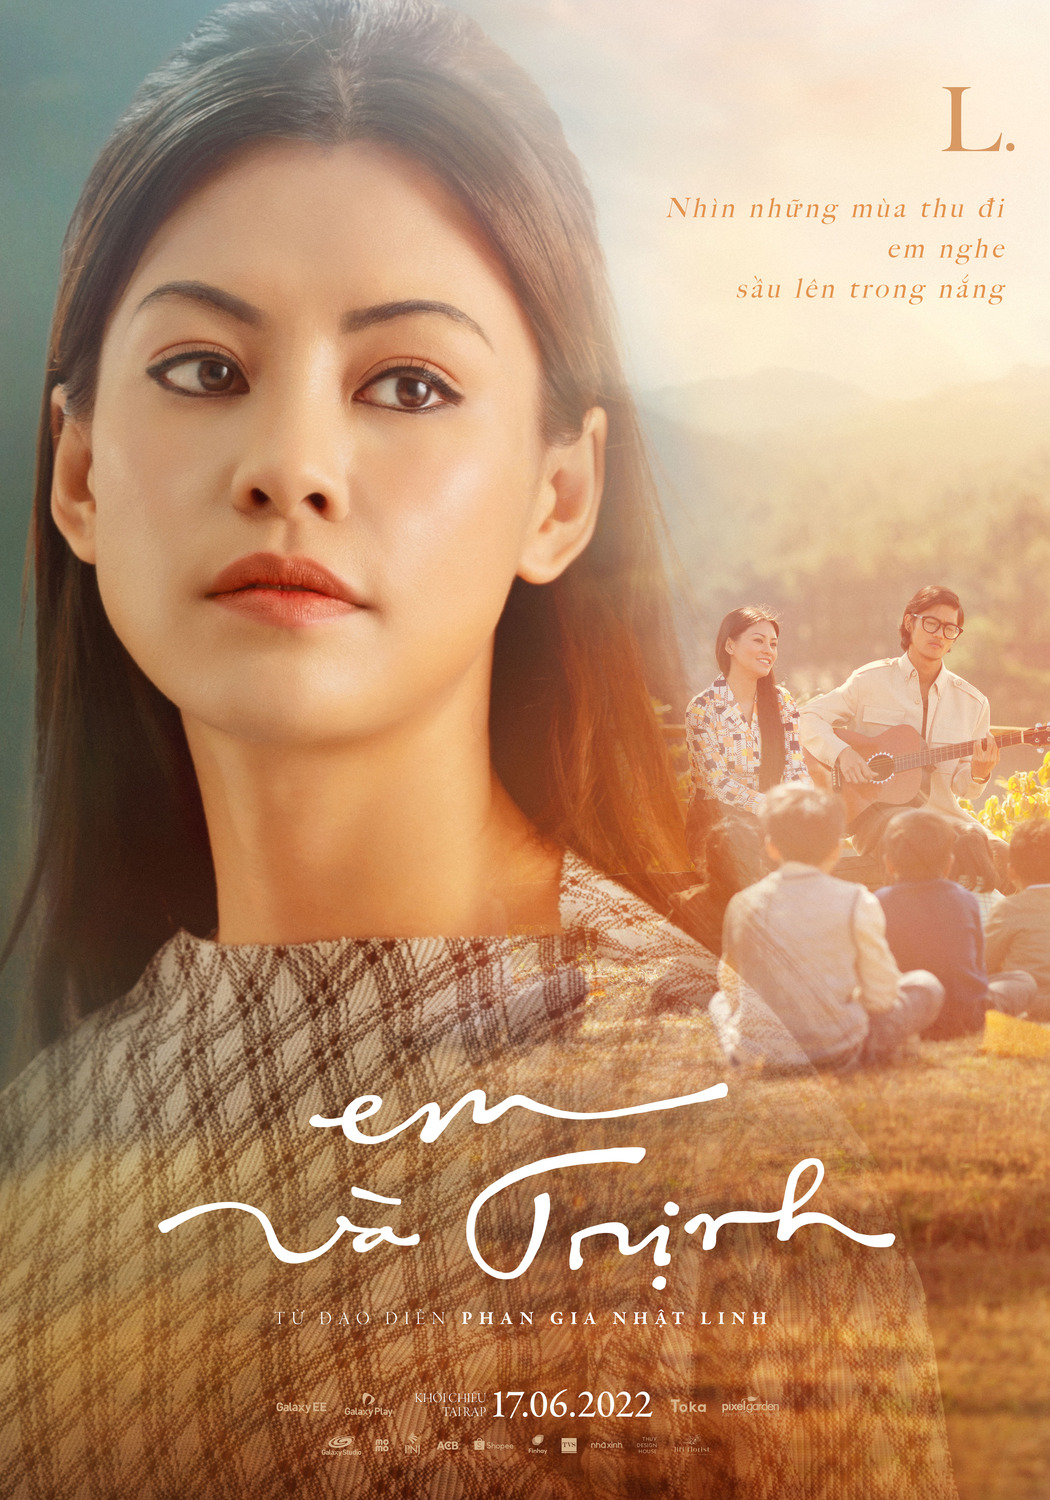 Extra Large Movie Poster Image for Em Va Trinh (#13 of 19)